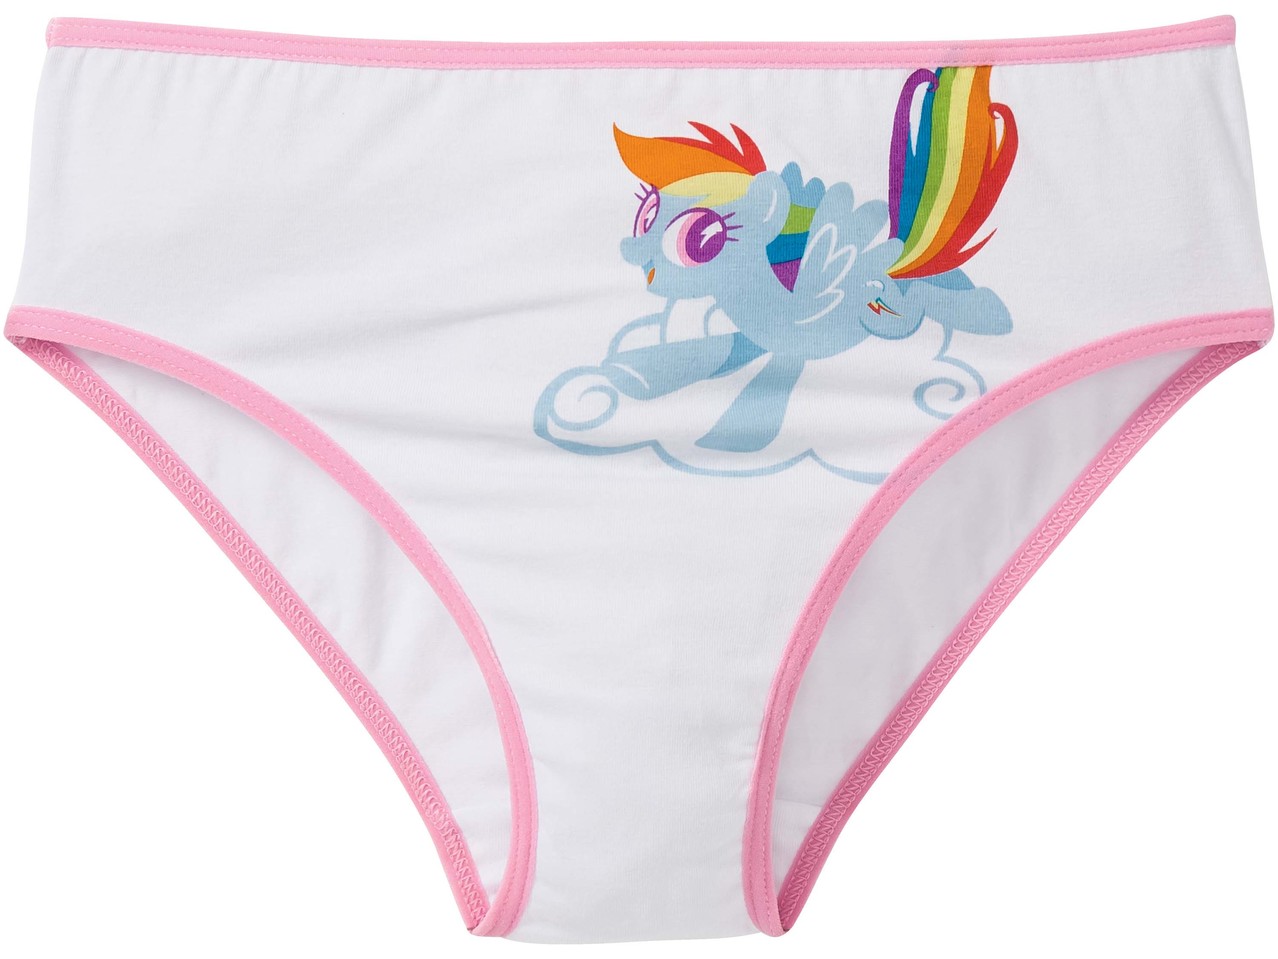 Kids' Character Underwear Set